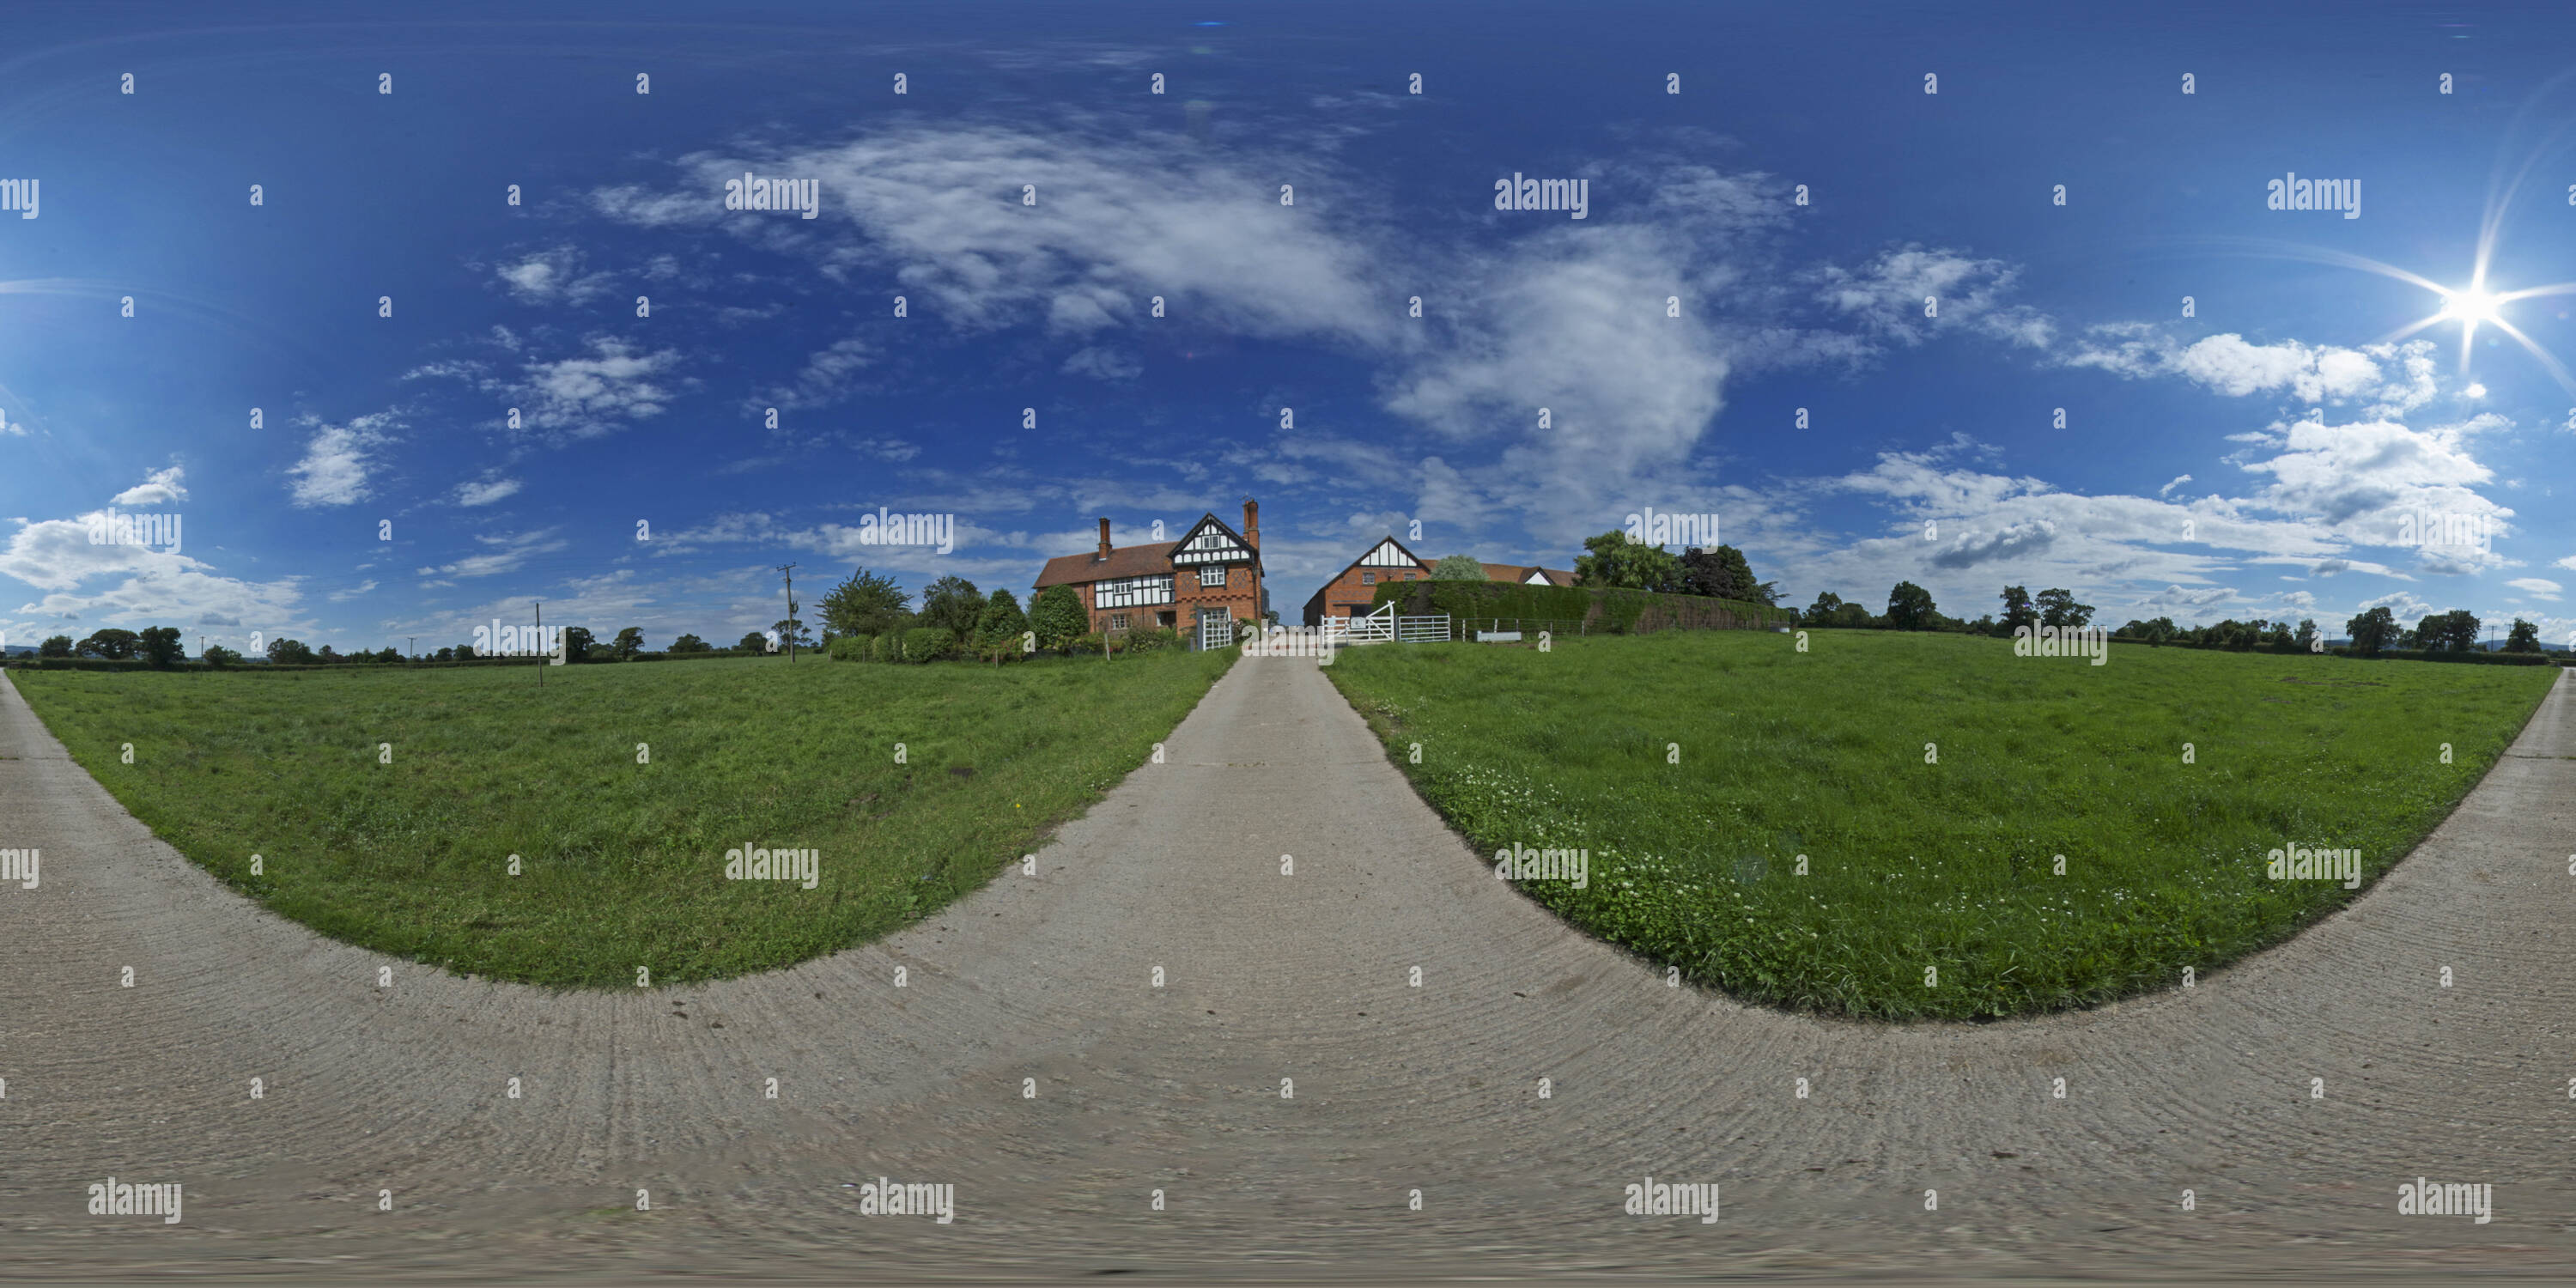 Vista panorámica en 360 grados de Farm2 360cities Panorama